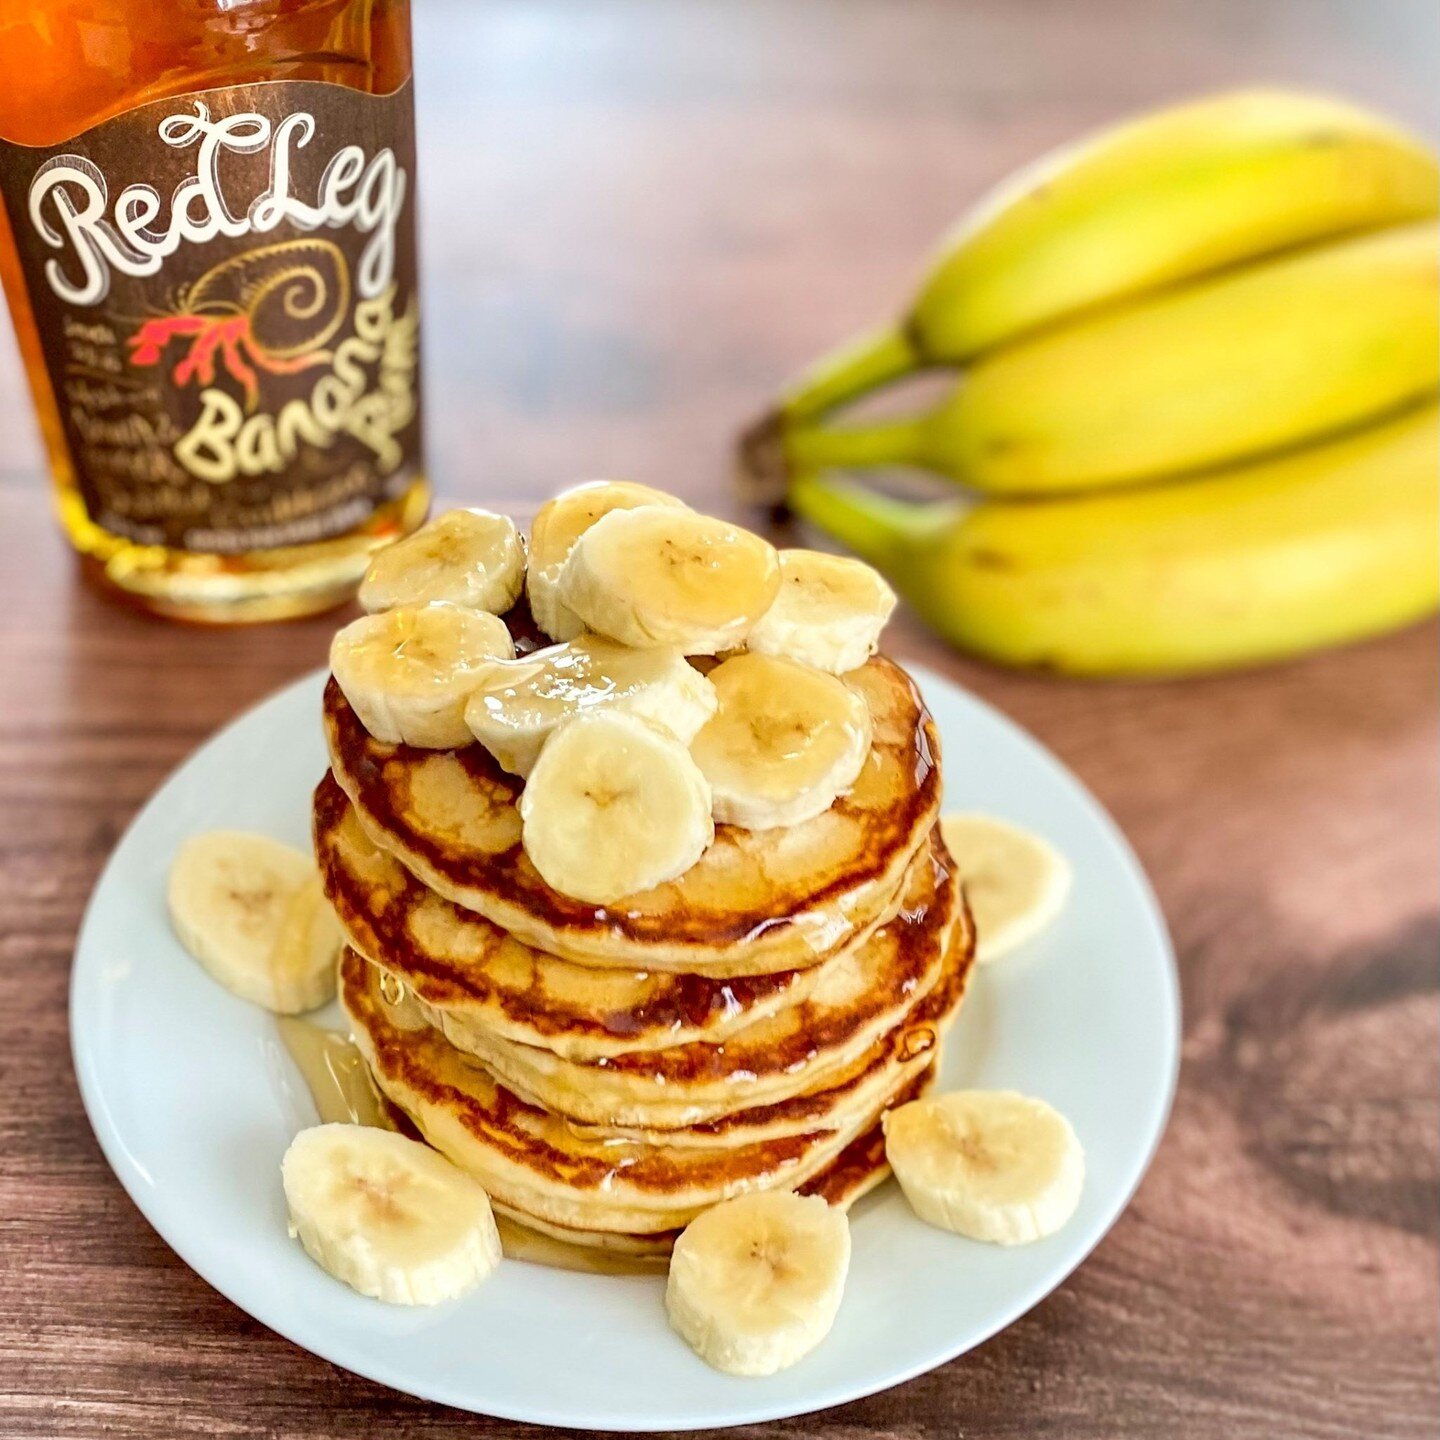 Add a twist to your pancakes with our RedLeg caramel sauce 🥞⁠
⁠
🍌 Spiced Banana Caramel 🍌 ⁠
⁠
🥞 8tbsp RedLeg Banana Rum⁠
🥞 160g light brown sugar⁠
🥞 2tbsp melted butter⁠
🥞 1tbsp maple syrup⁠
⁠
Add the rum, melted butter and maple syrup to a sa